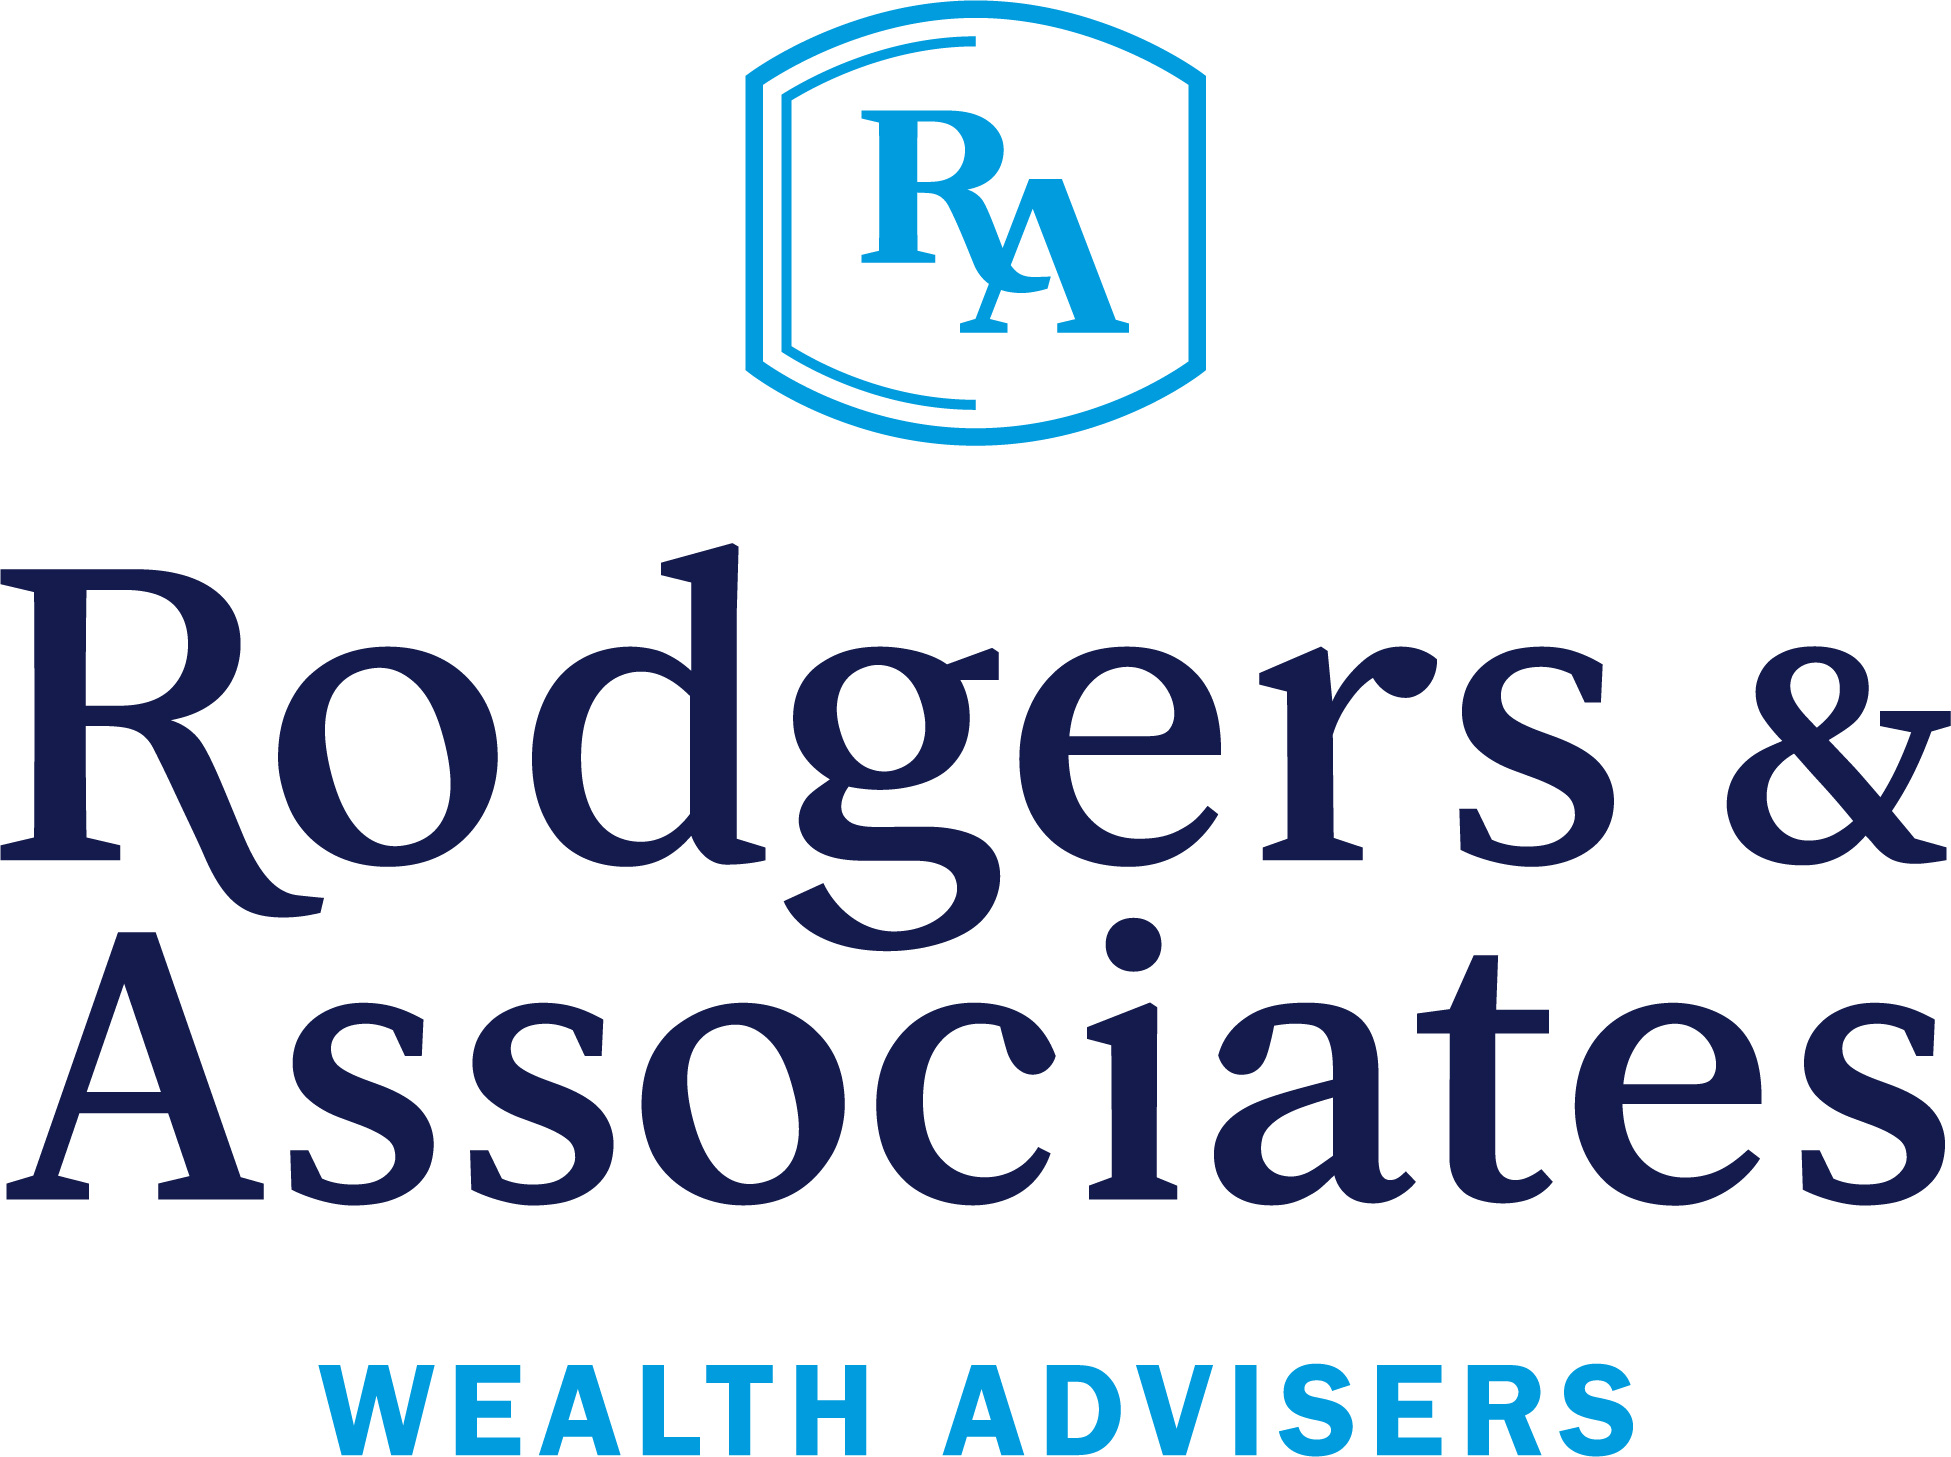 Rodgers & Associates